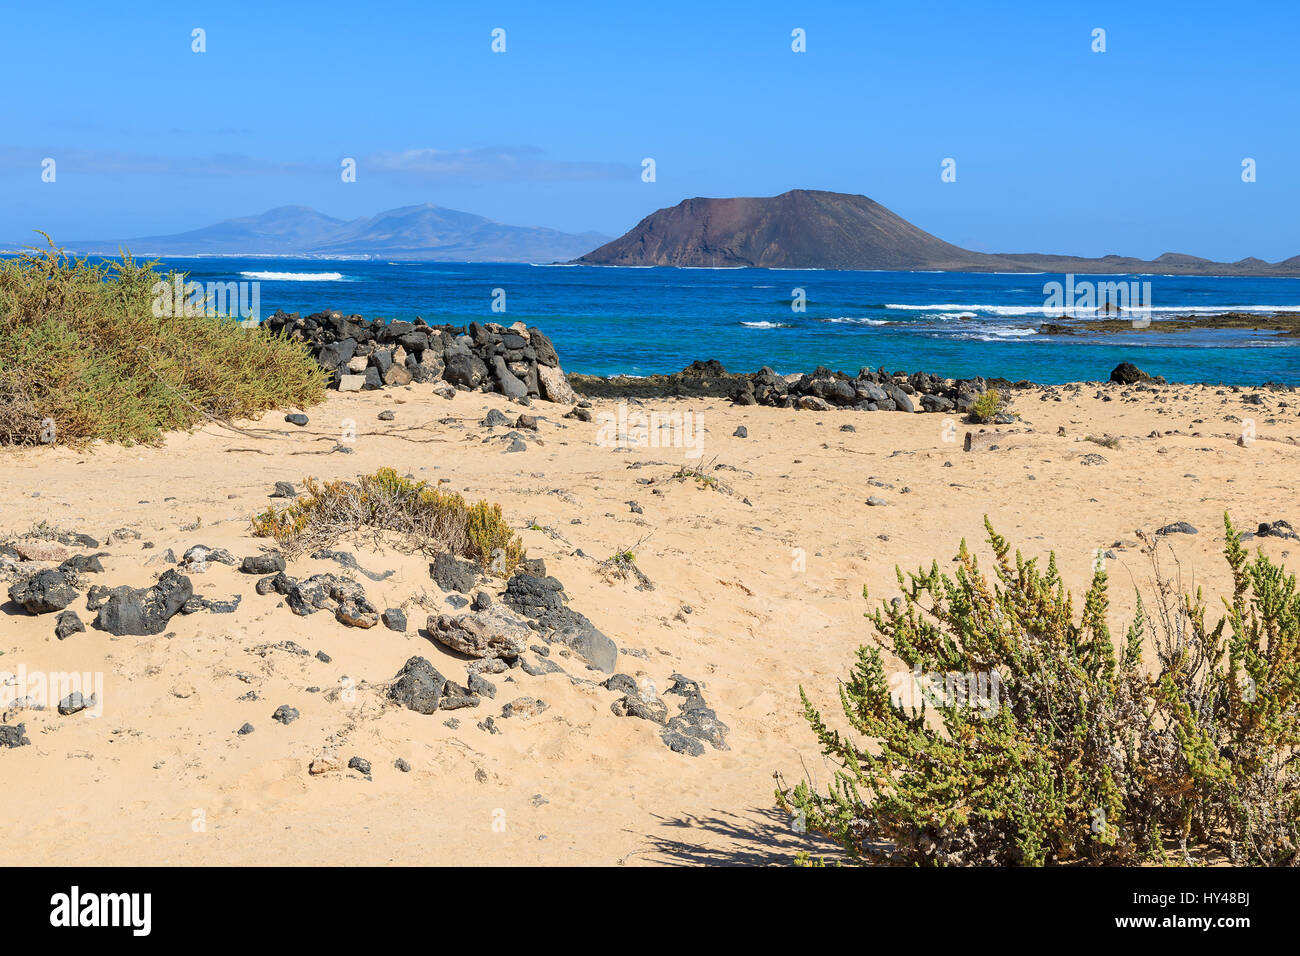 View of Lobos island from Beach in Corralejo, Fuerteventura, Canary Islands, Spain Stock Photo